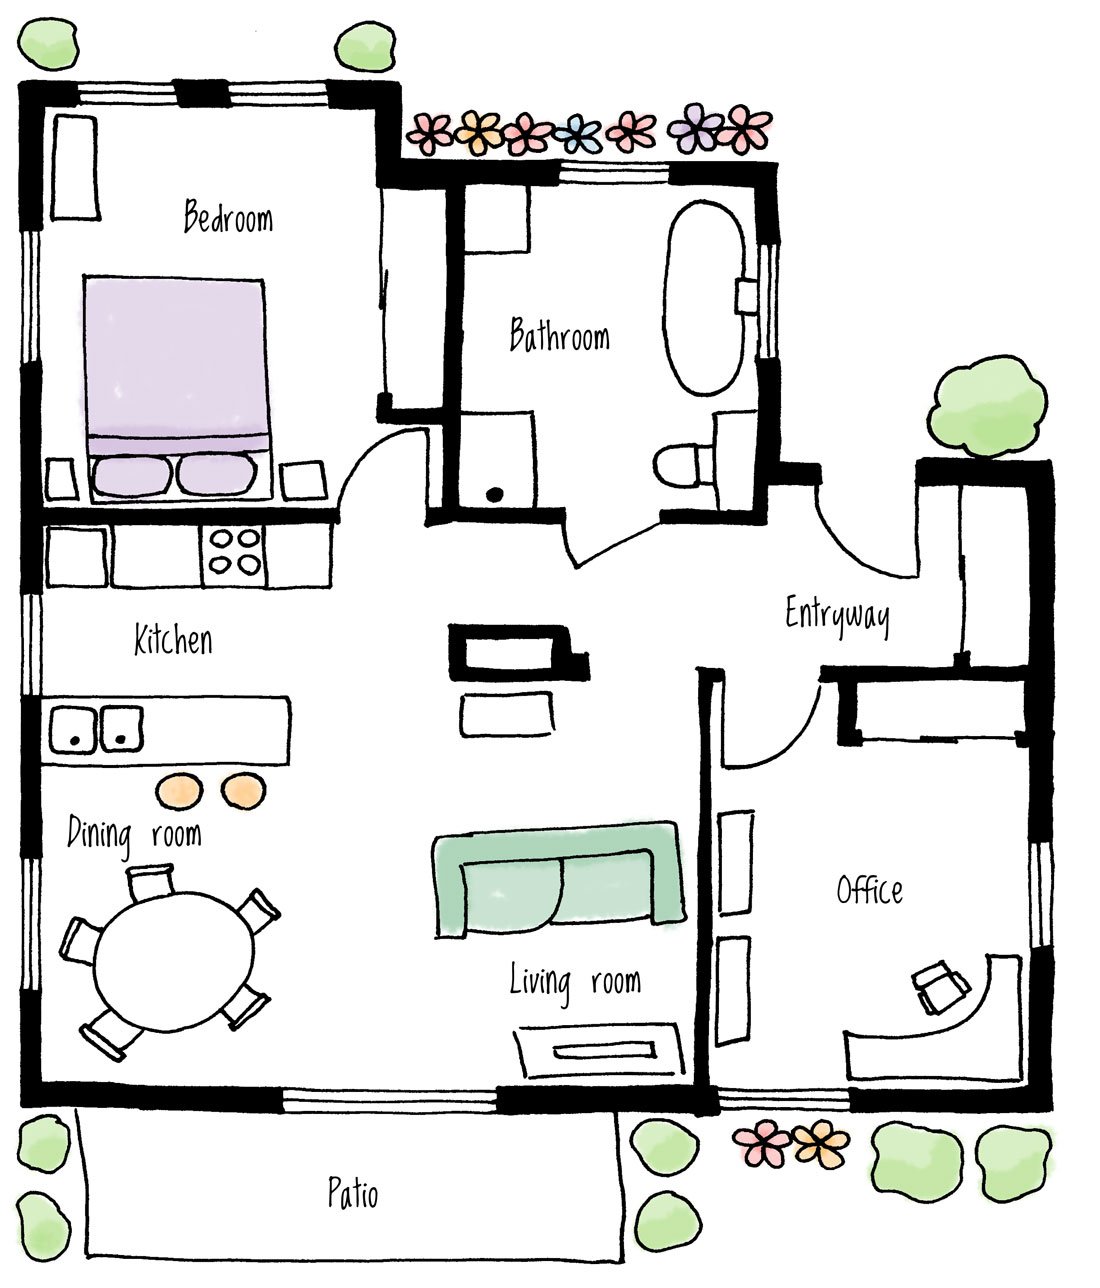 Illustration of a two-bedroom floor plan.